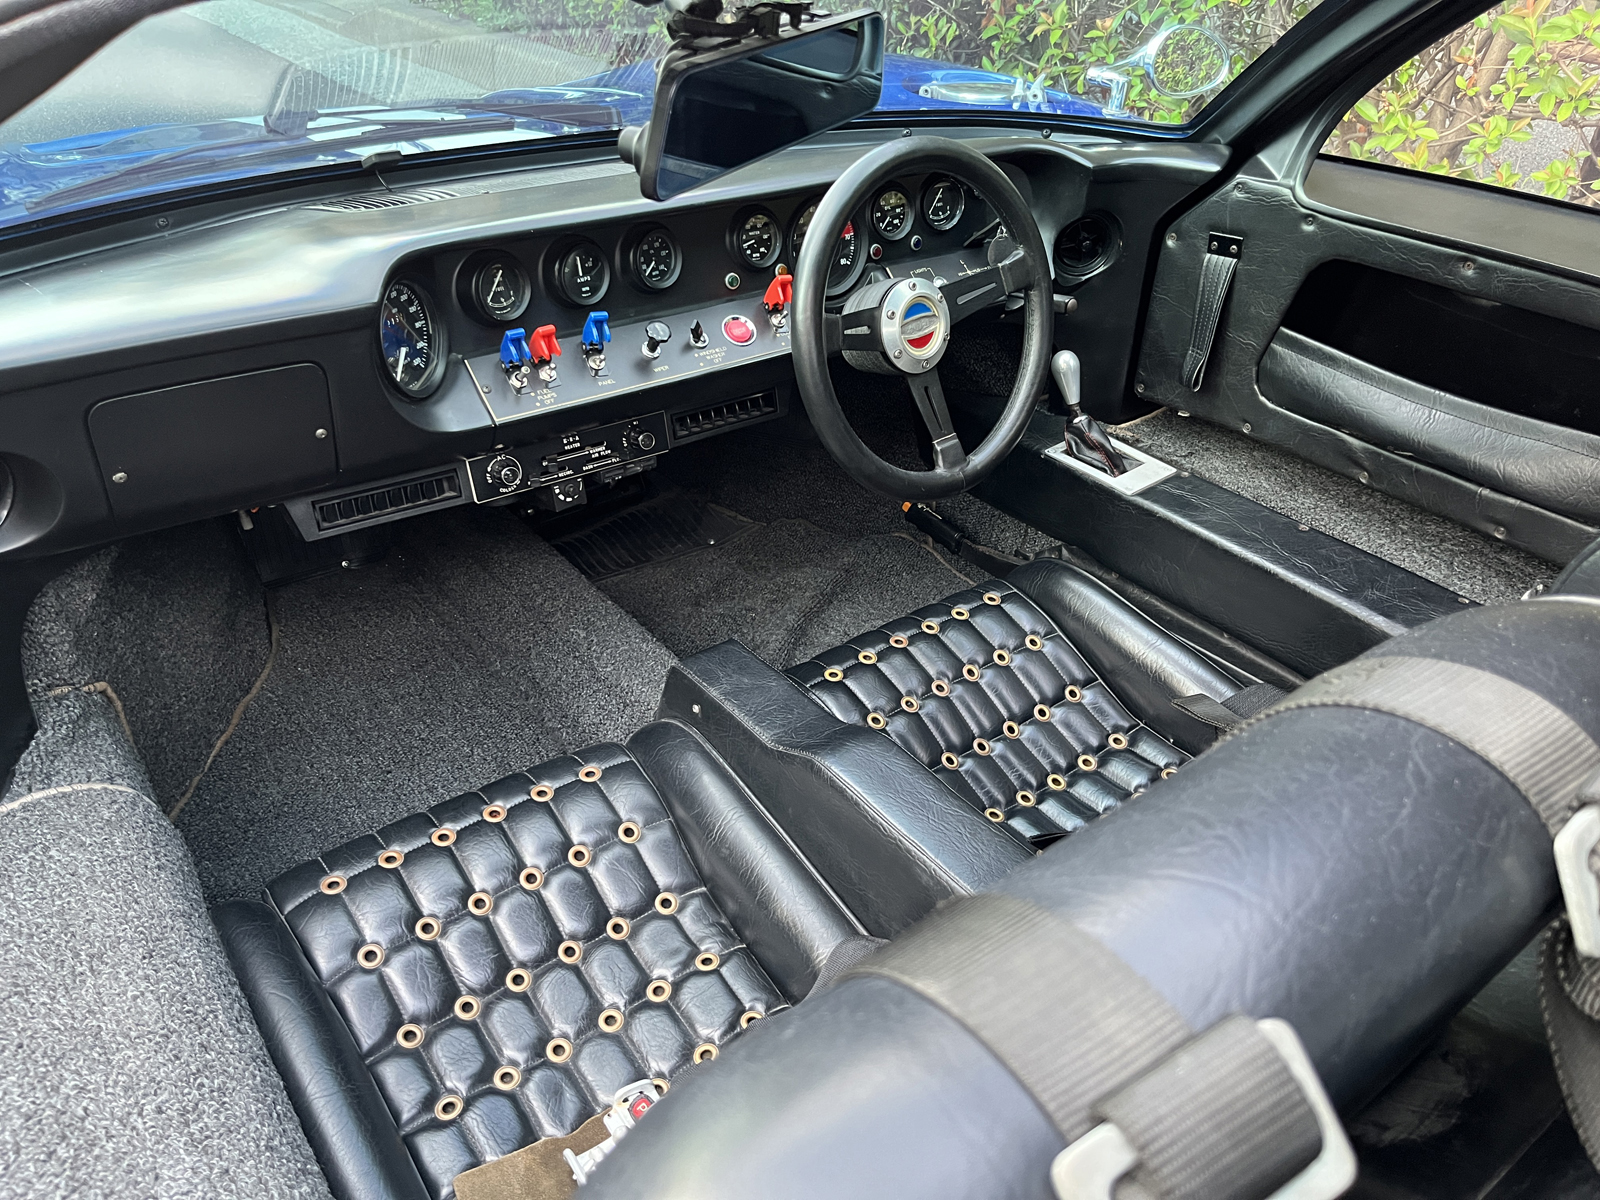 GT40 E.R.A製レプリカリッチライン